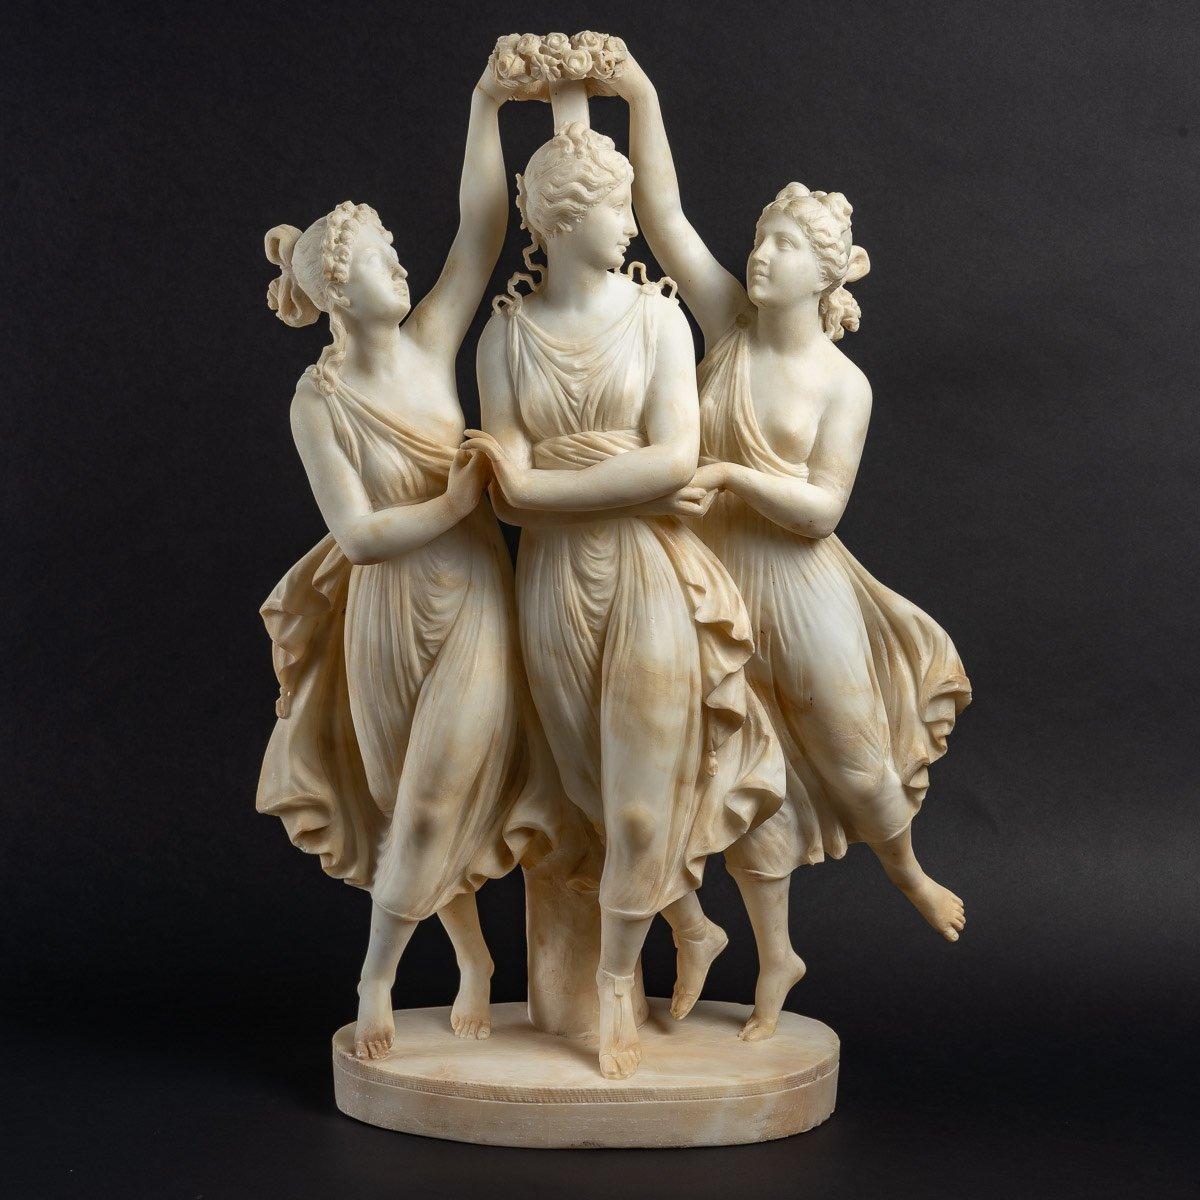 Alabaster Sculpture The Three Graces, end of the 19th Century.
Alabaster sculpture of the Three Graces, late 19th century, representing the Three Graces after Antonio Canova.
Measures: H: 62 cm, W: 43 cm, D: 25 cm.
ref 3335